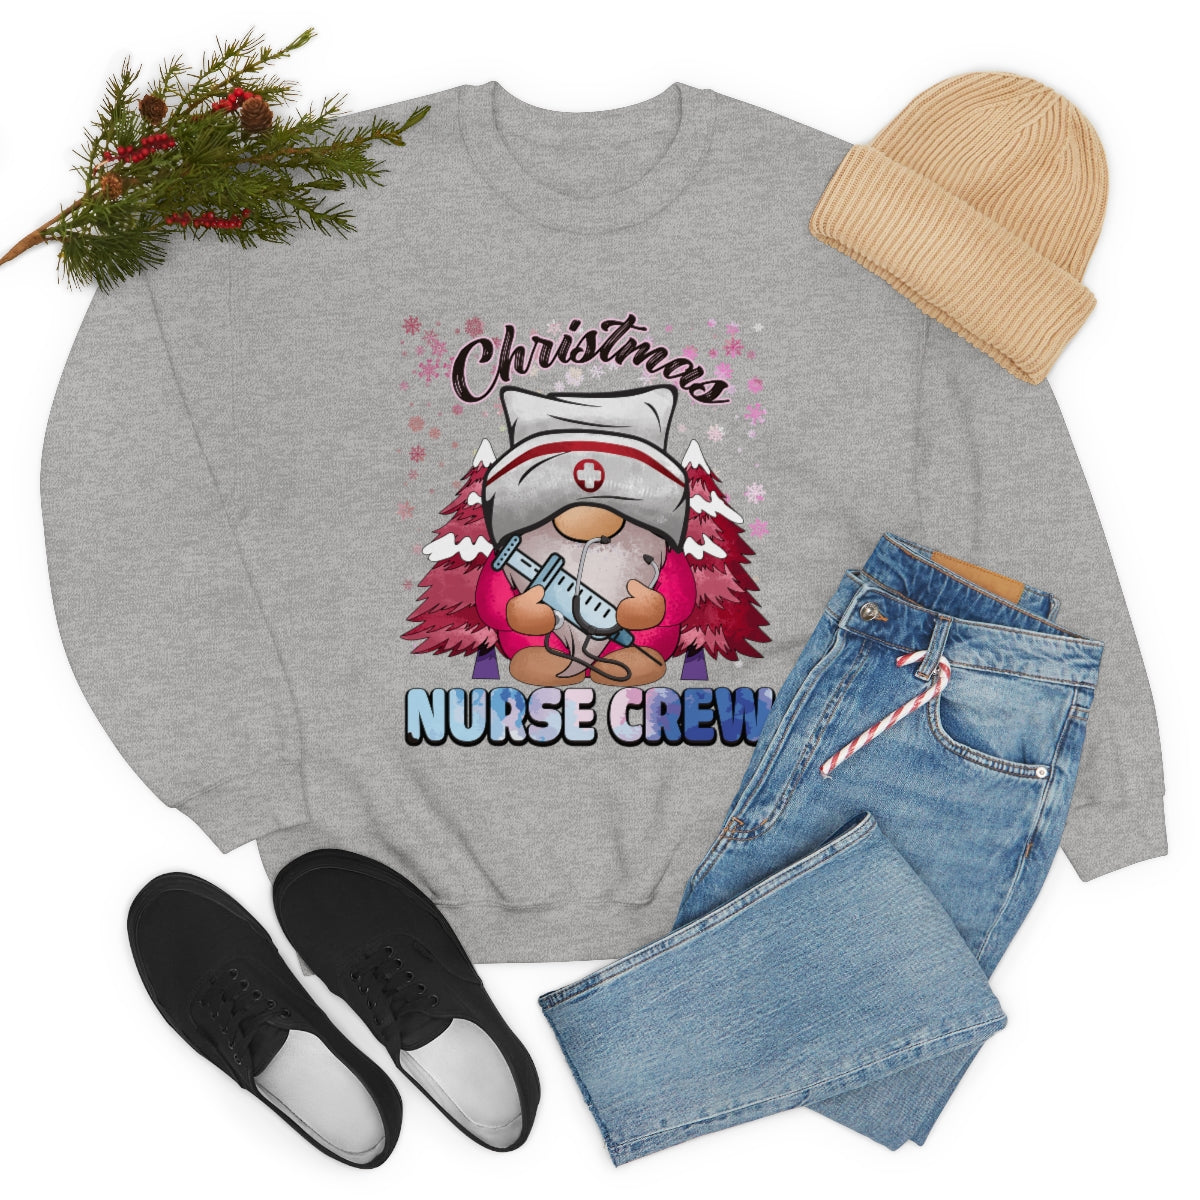 Christmas Nurse Crew Crewneck Sweatshirt, Cute Gnome Nursing Student Christmas Gift